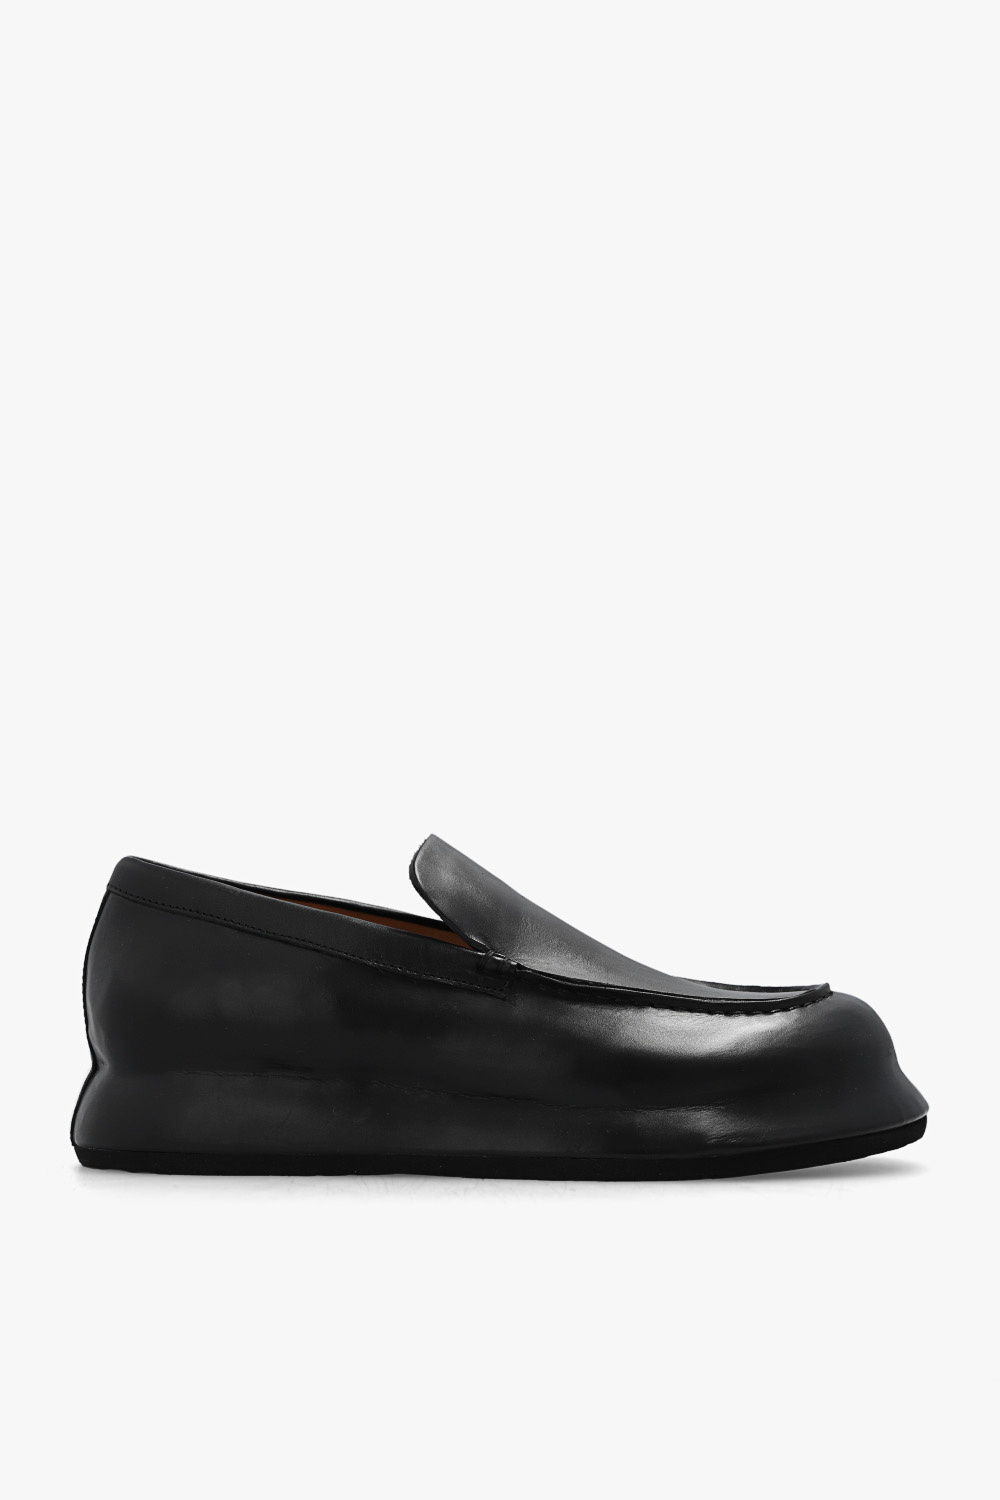 Jacquemus ‘Bricciola’ leather loafers